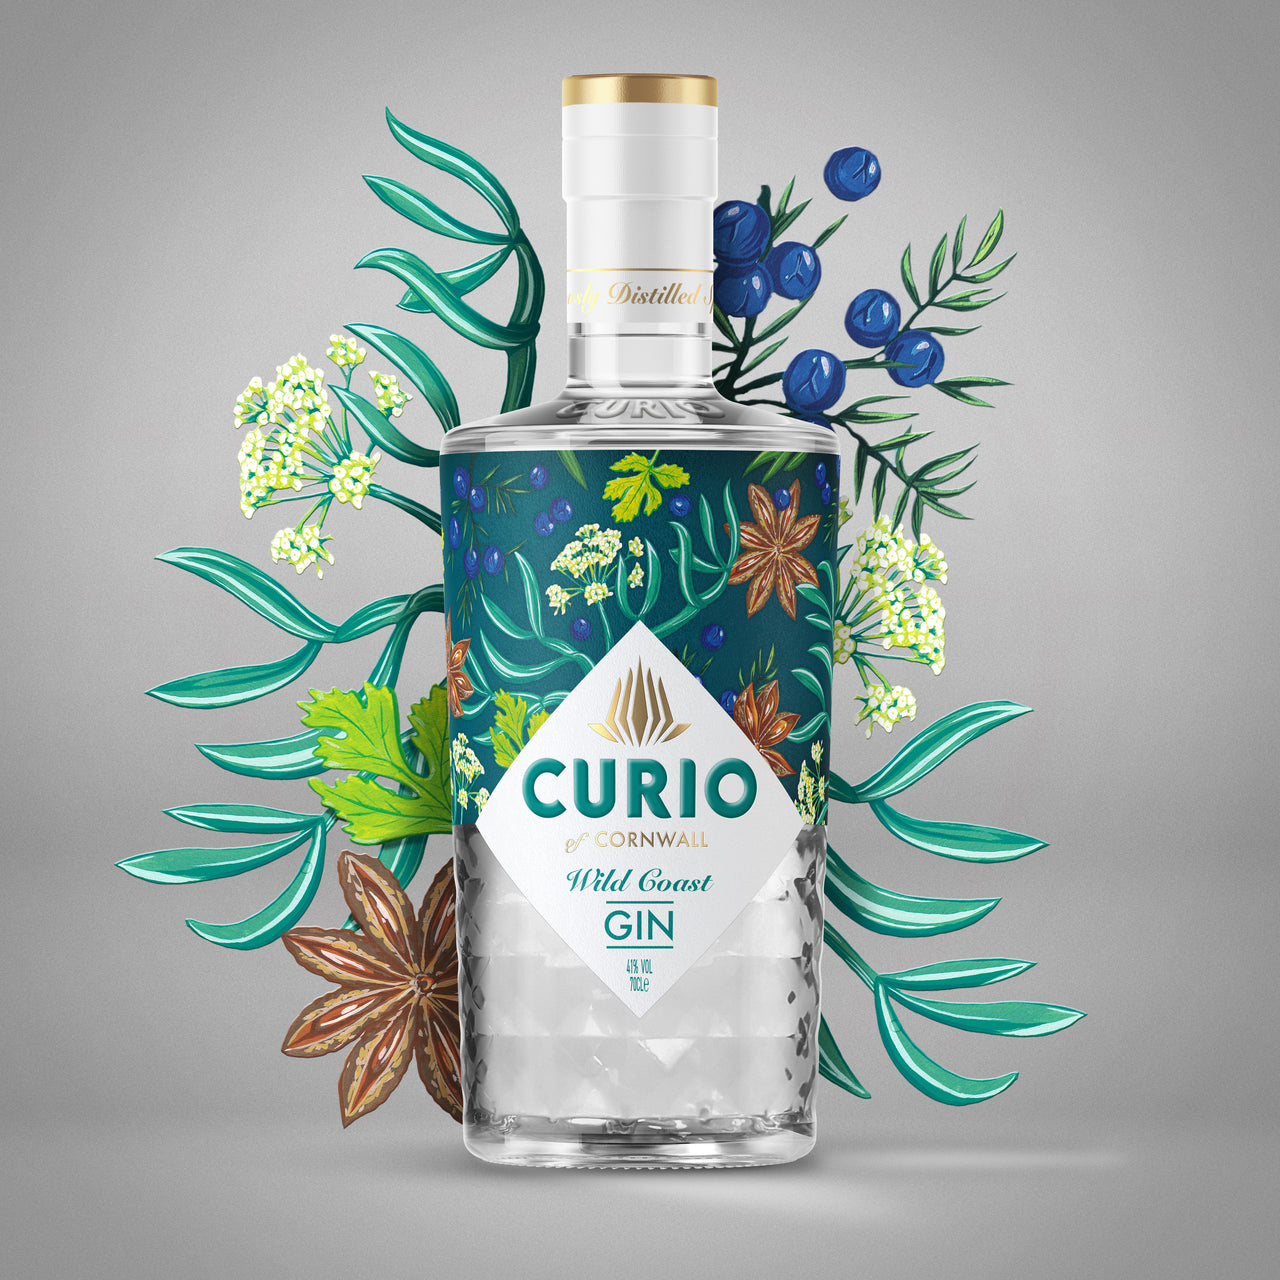 Curio Wild Coast Gin